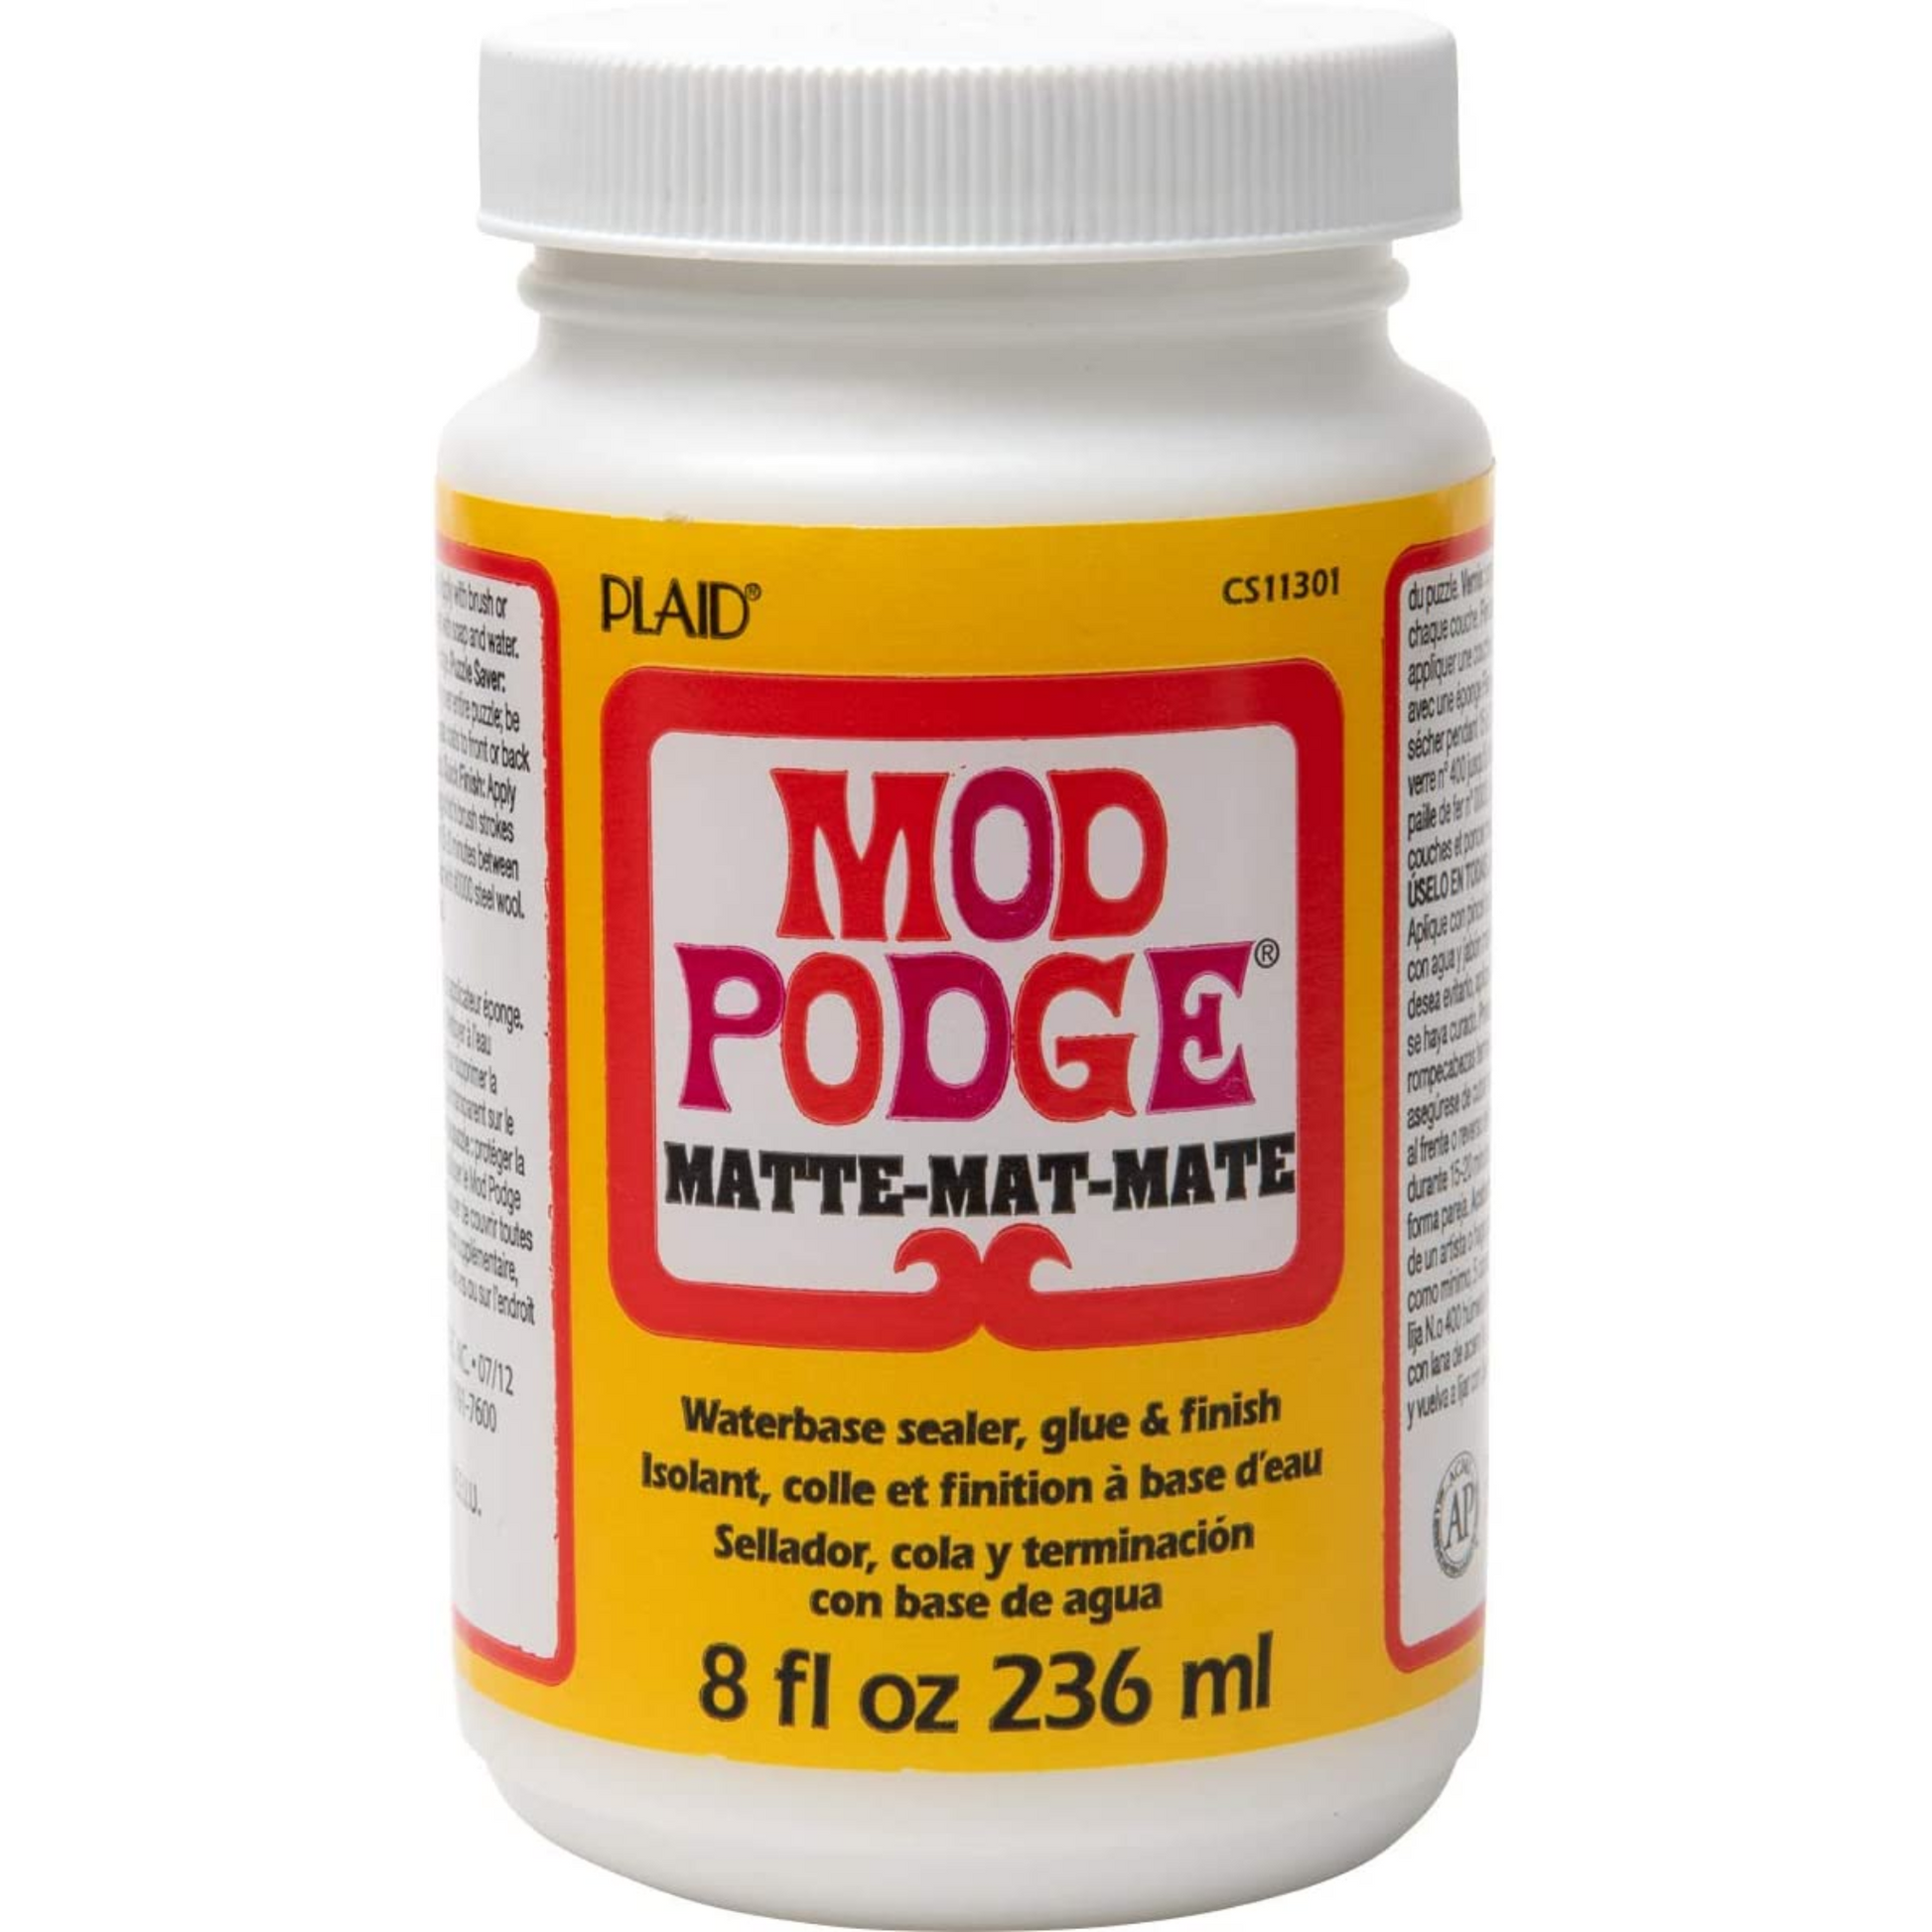 Mod Podge Matte, 8 oz. Decopuage Medium and Glue available at Milton's Daughter